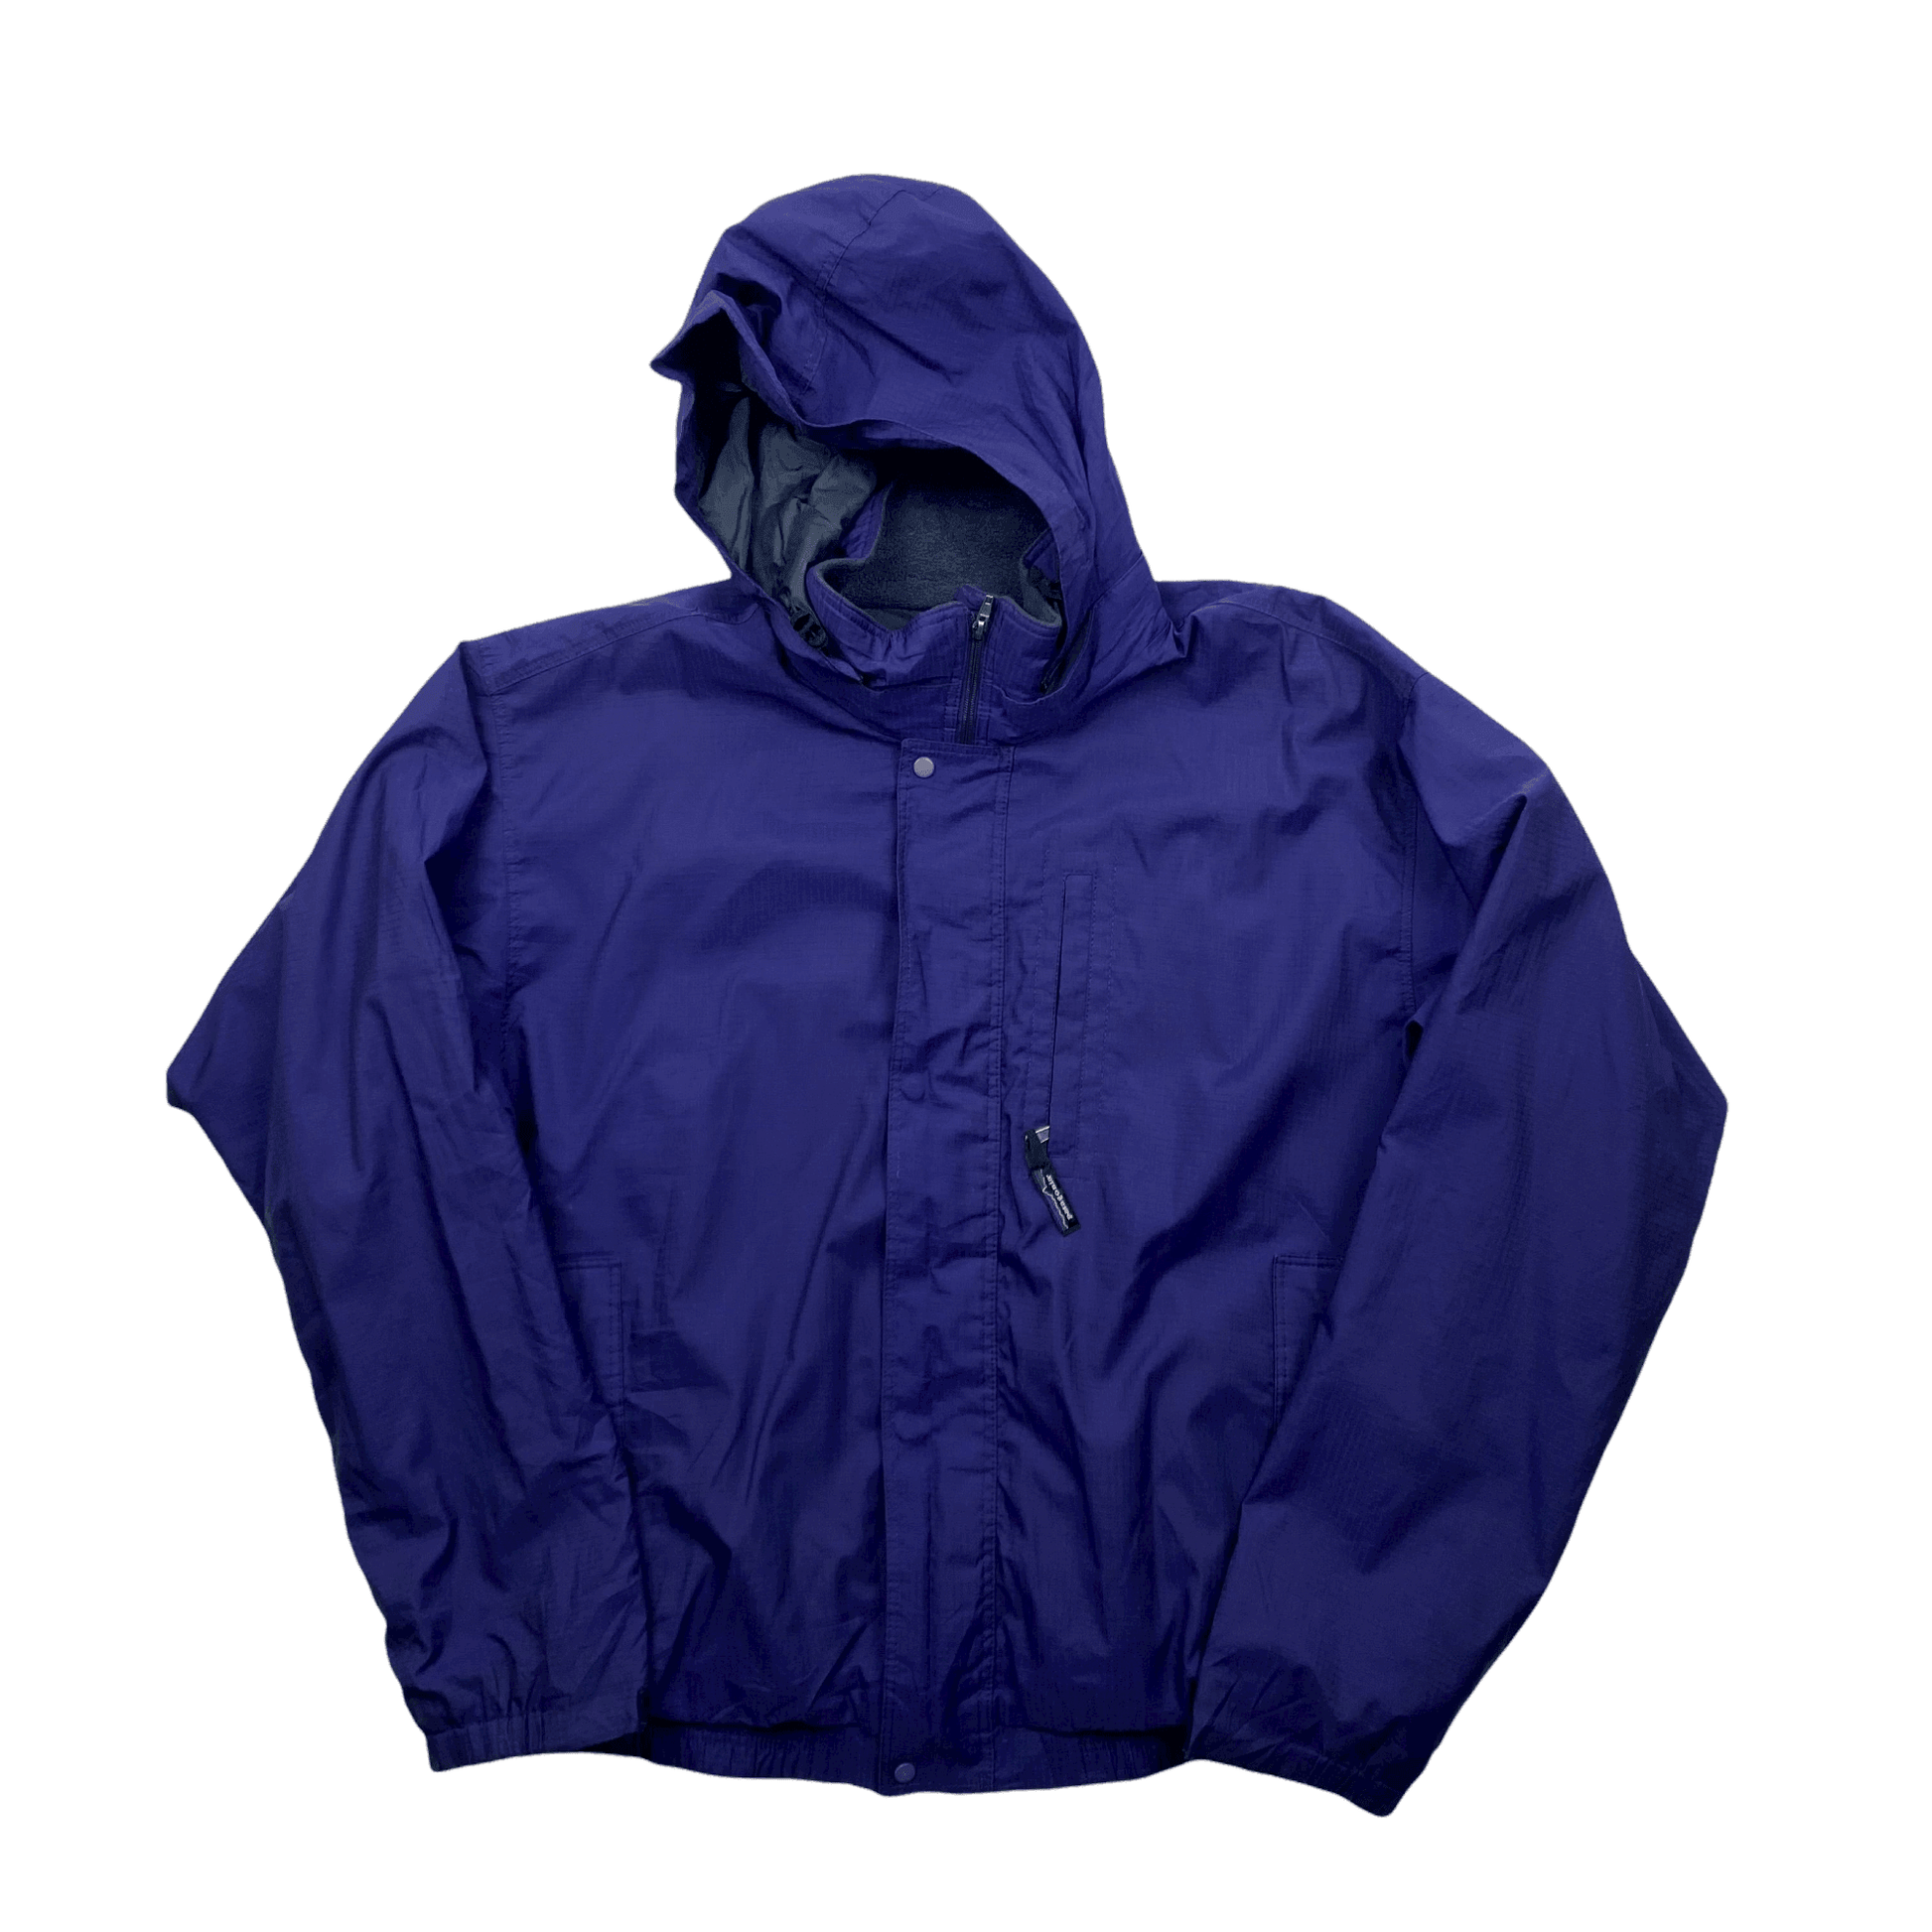 Vintage 90s Women's Purple Patagonia Fleece Lined Jacket - Large - The Streetwear Studio